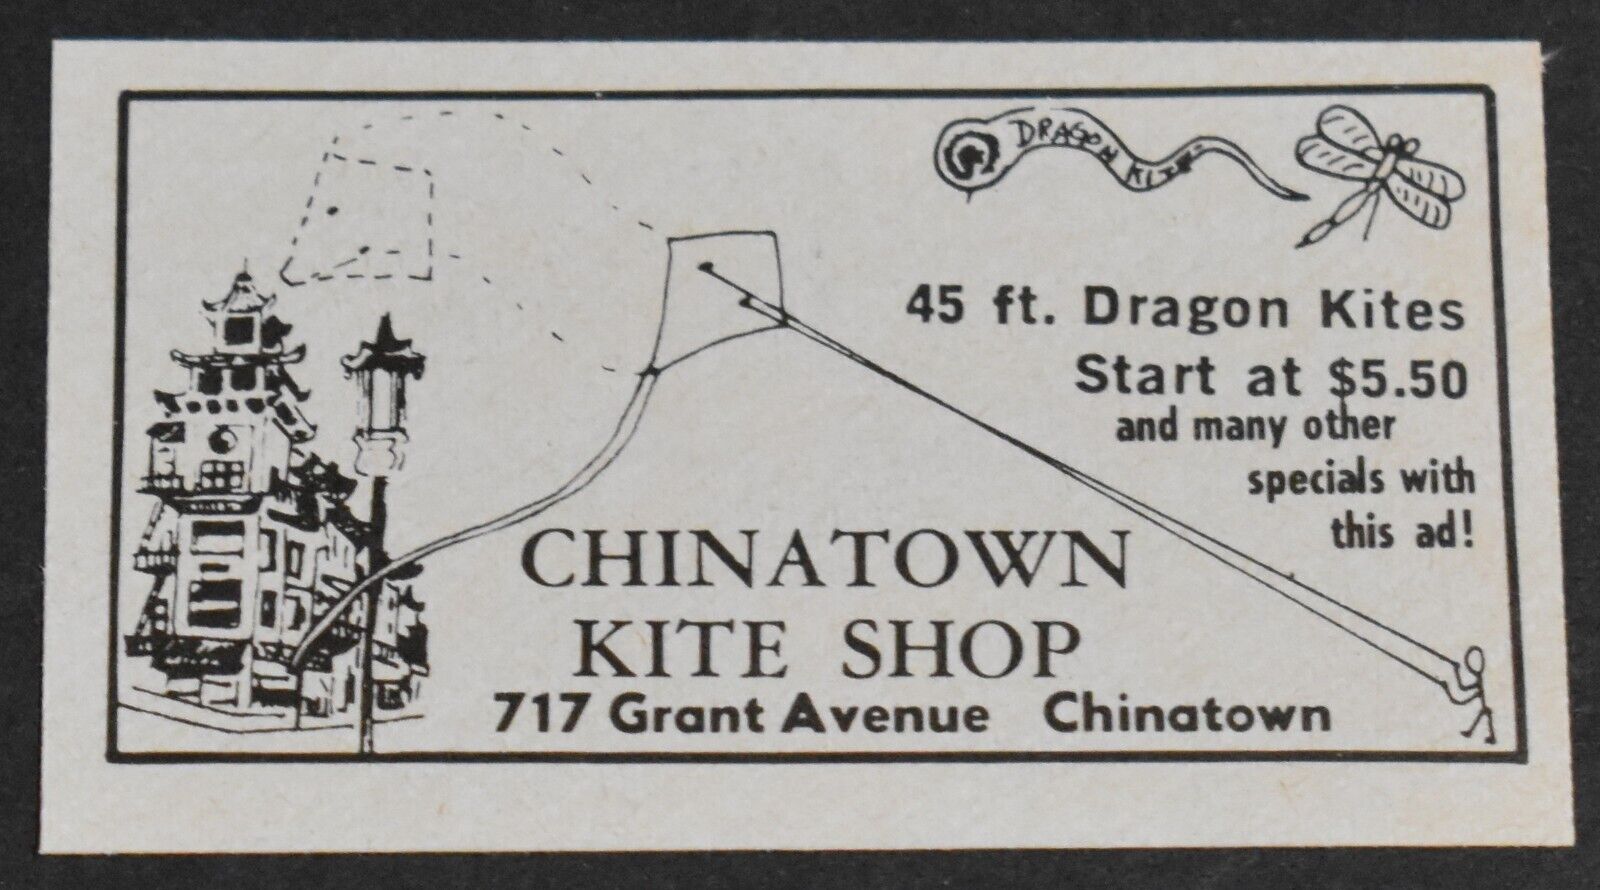 1979 Print Ad San Francisco Chinatown Kite Shop 717 Grant Ave Dragaon Kites Art